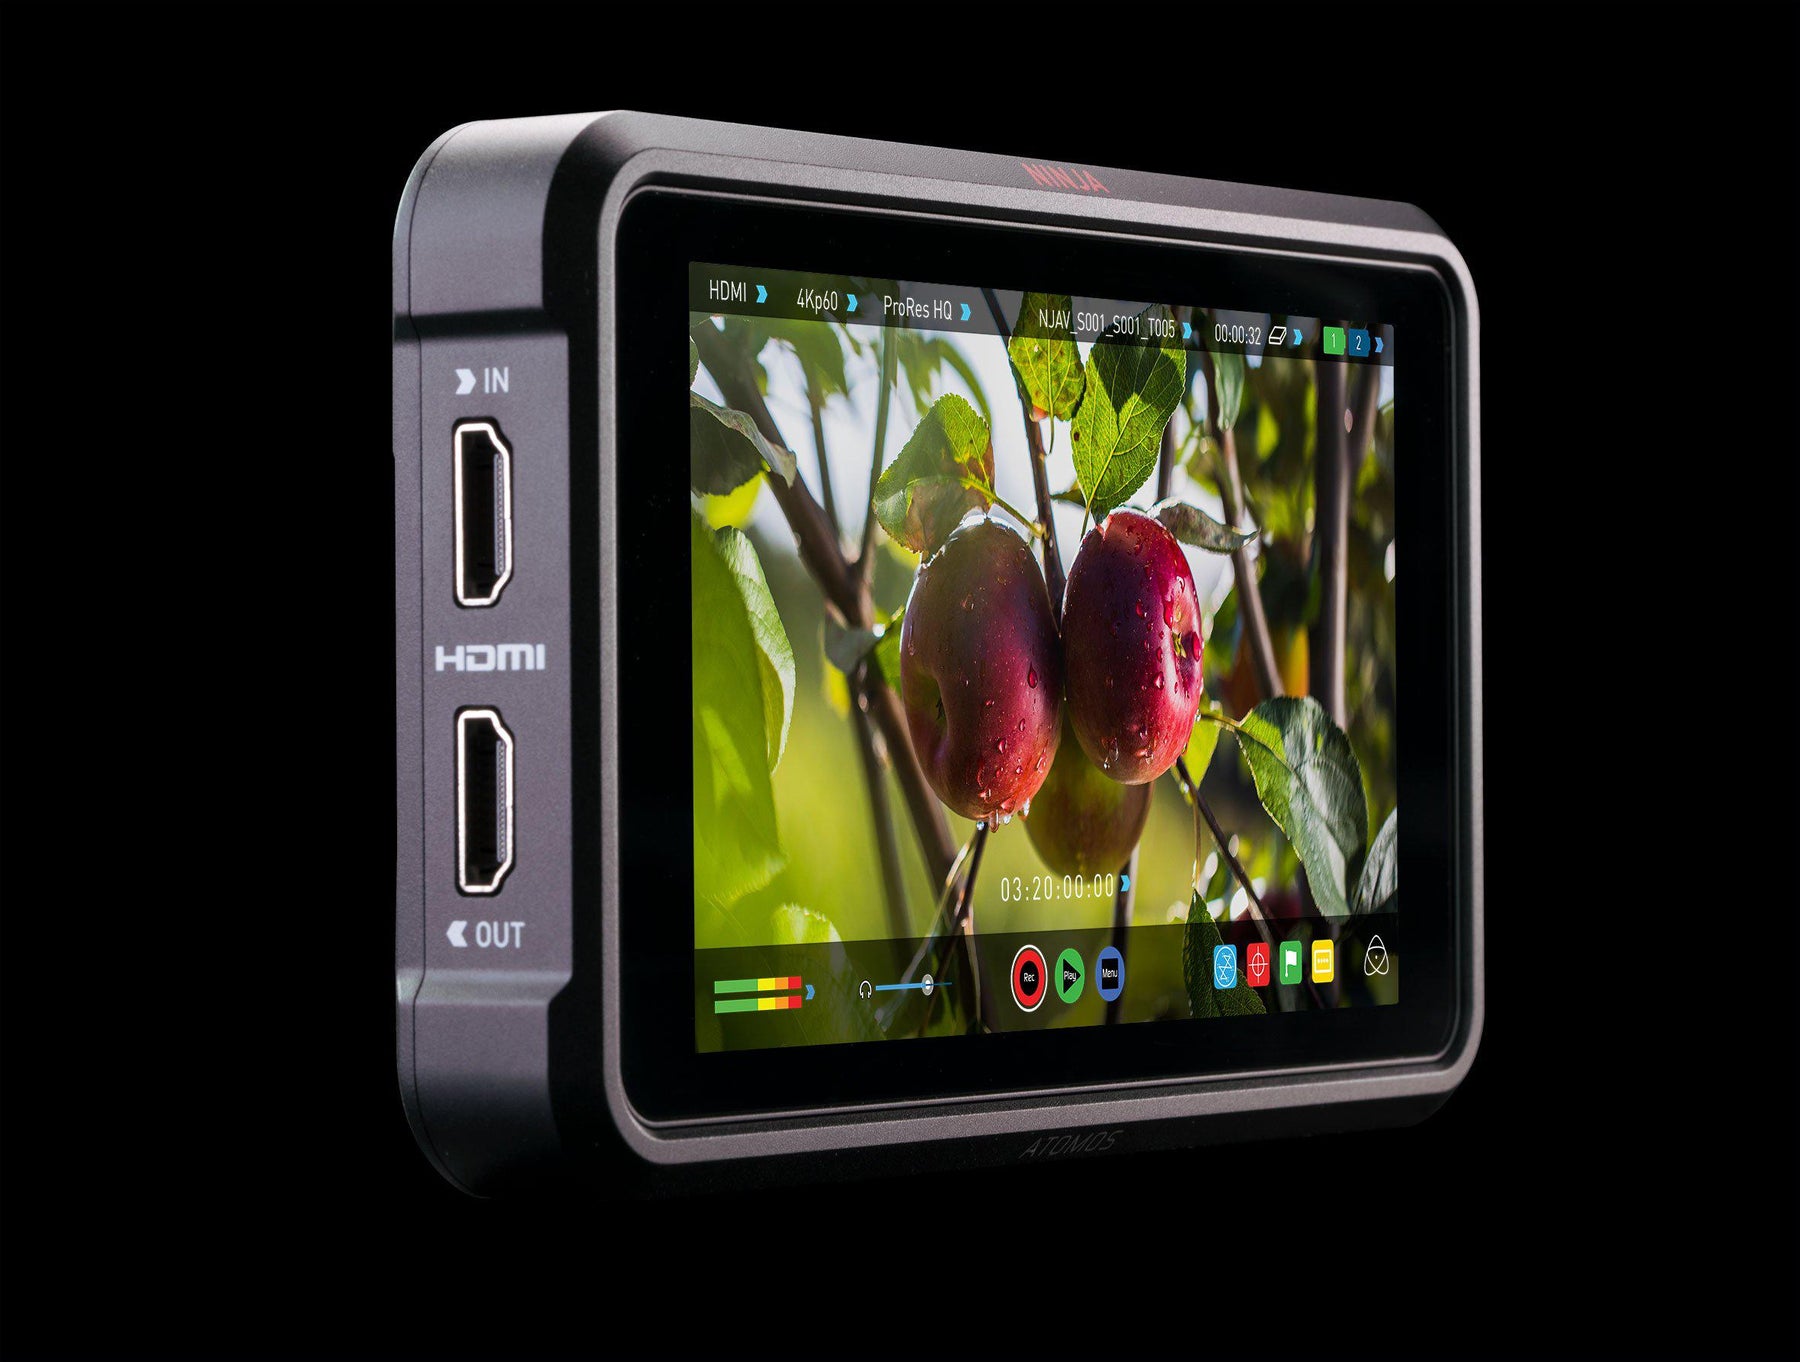 Atomos Ninja V 5 Touchscreen Recording Monitor W/Atomos Power Kit/Microf  Cloth ATOMNJAV01 D